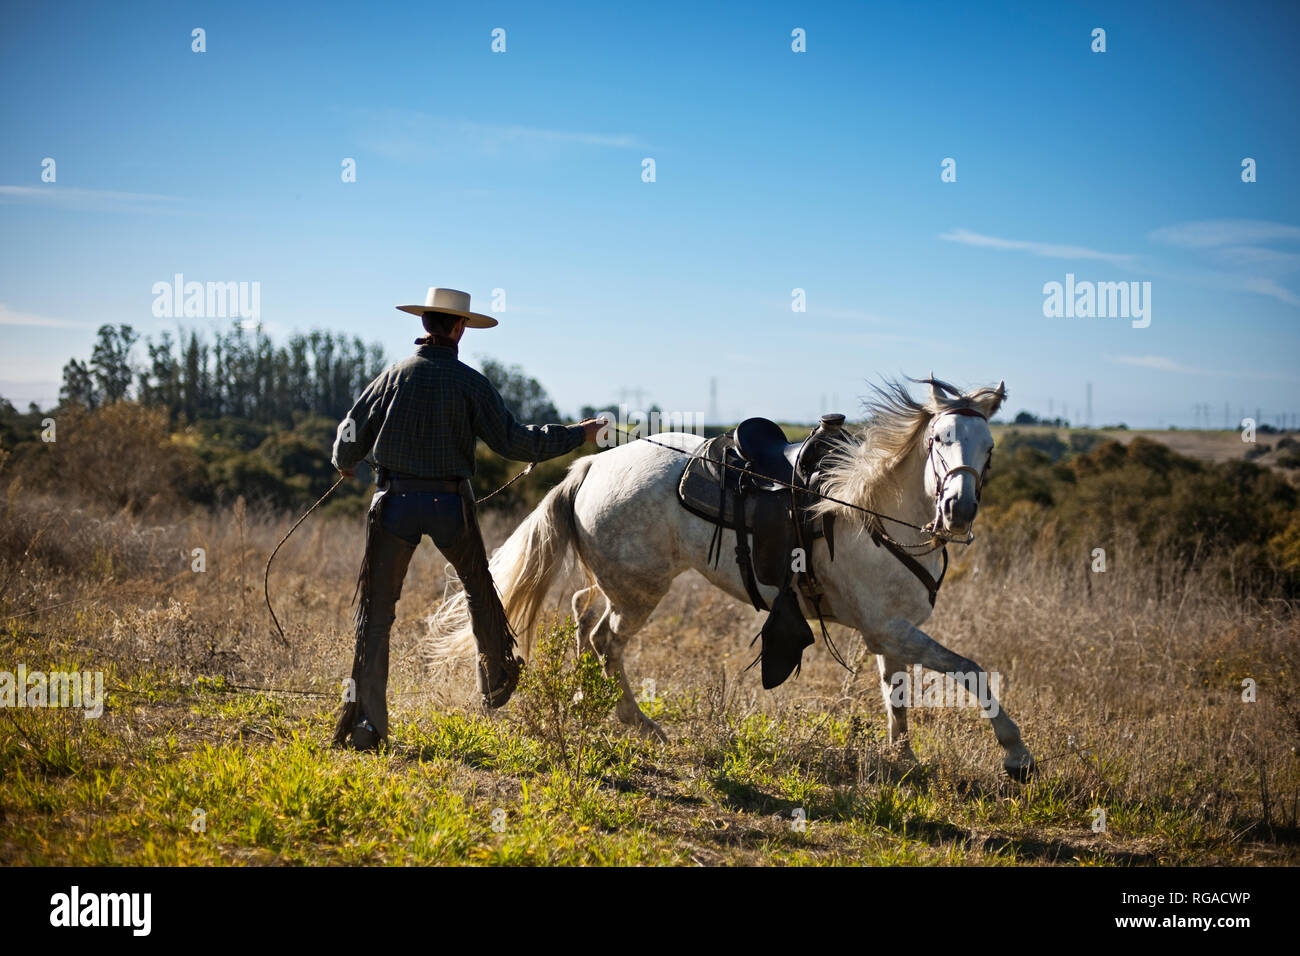 Cowboy wrangling horse Stock Photo - Alamy